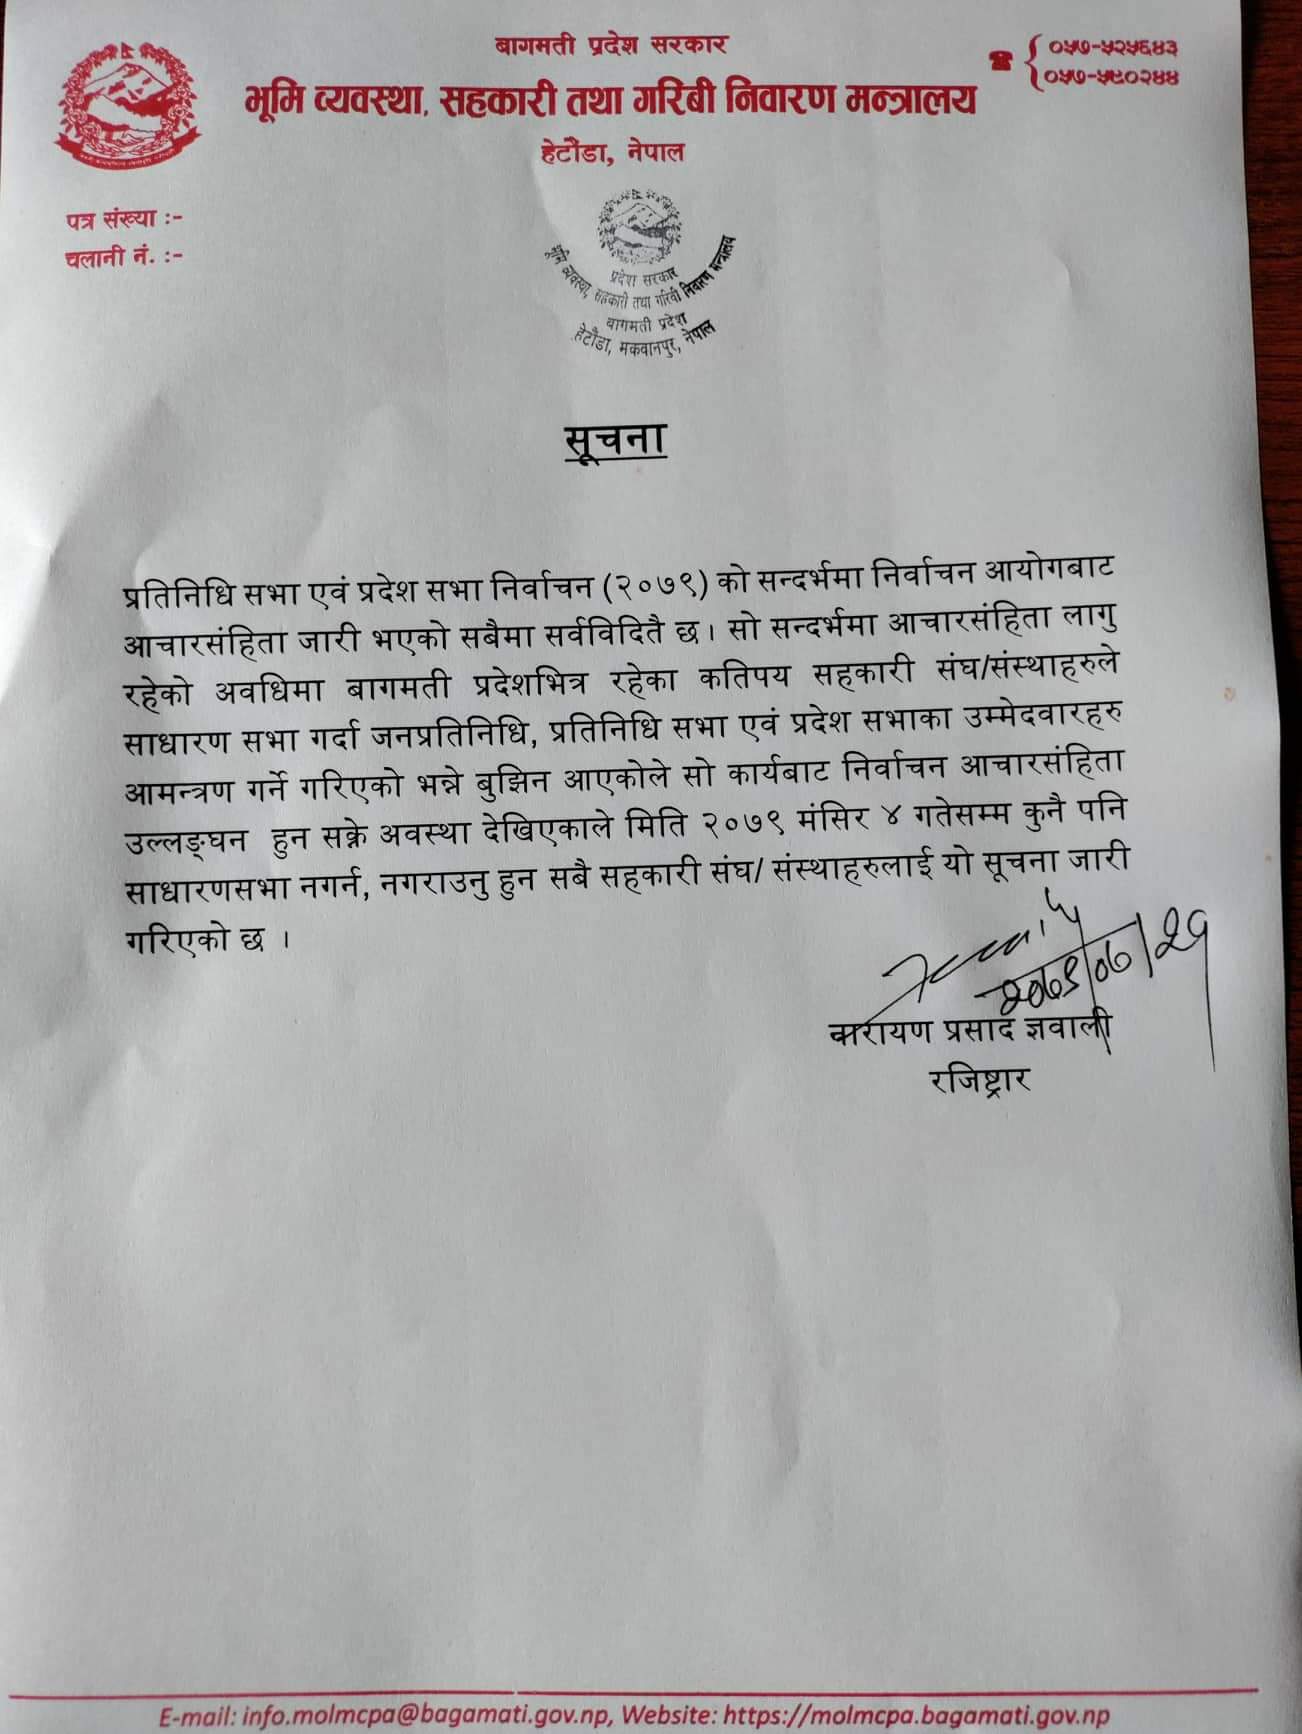 Bagmati pradesh noticeLoading Notice